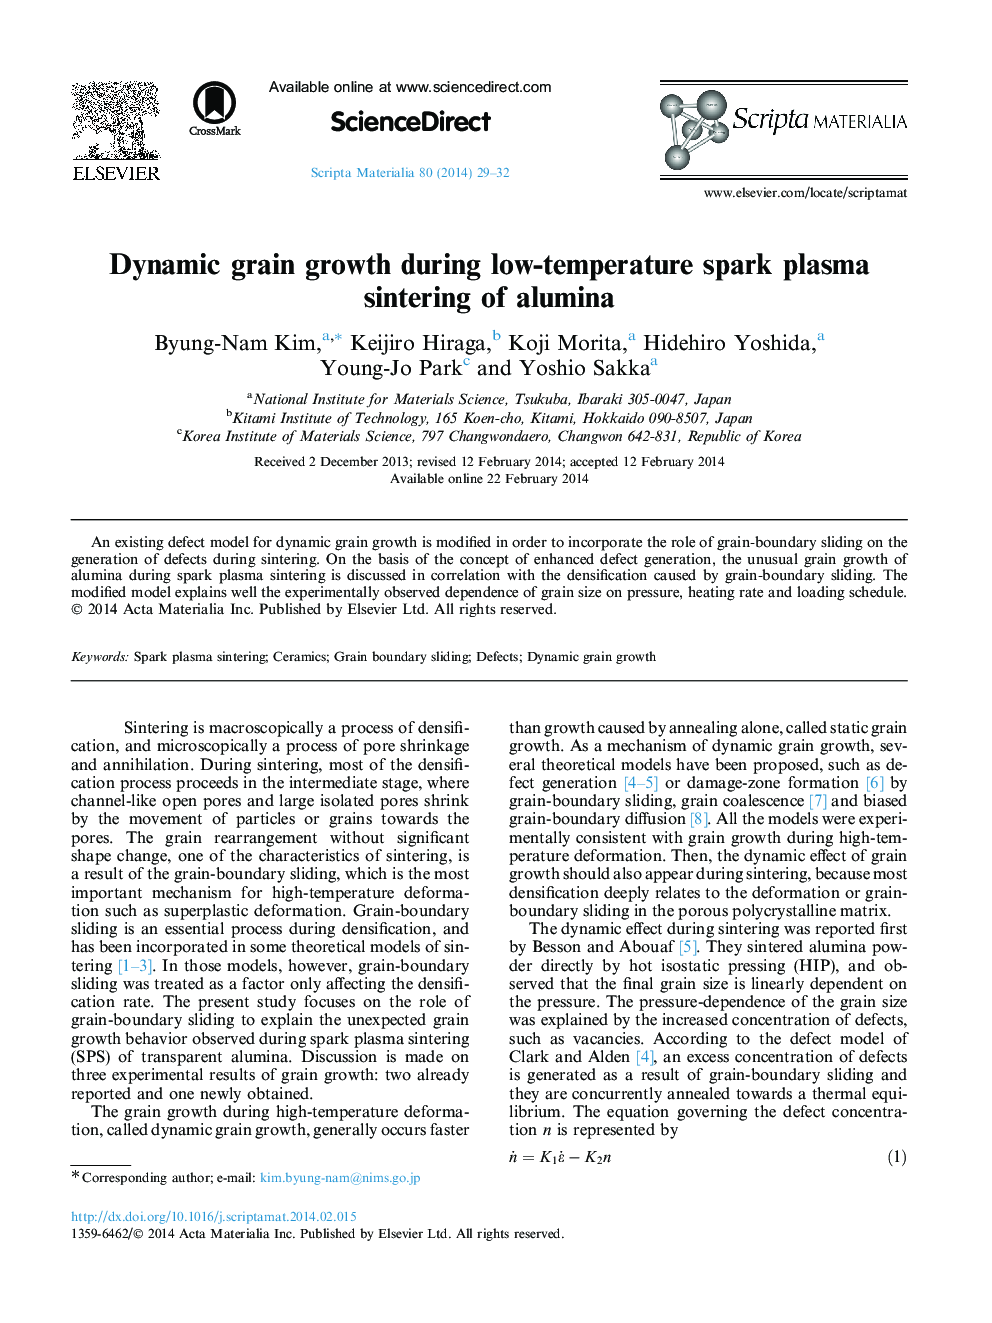 Dynamic grain growth during low-temperature spark plasma sintering of alumina